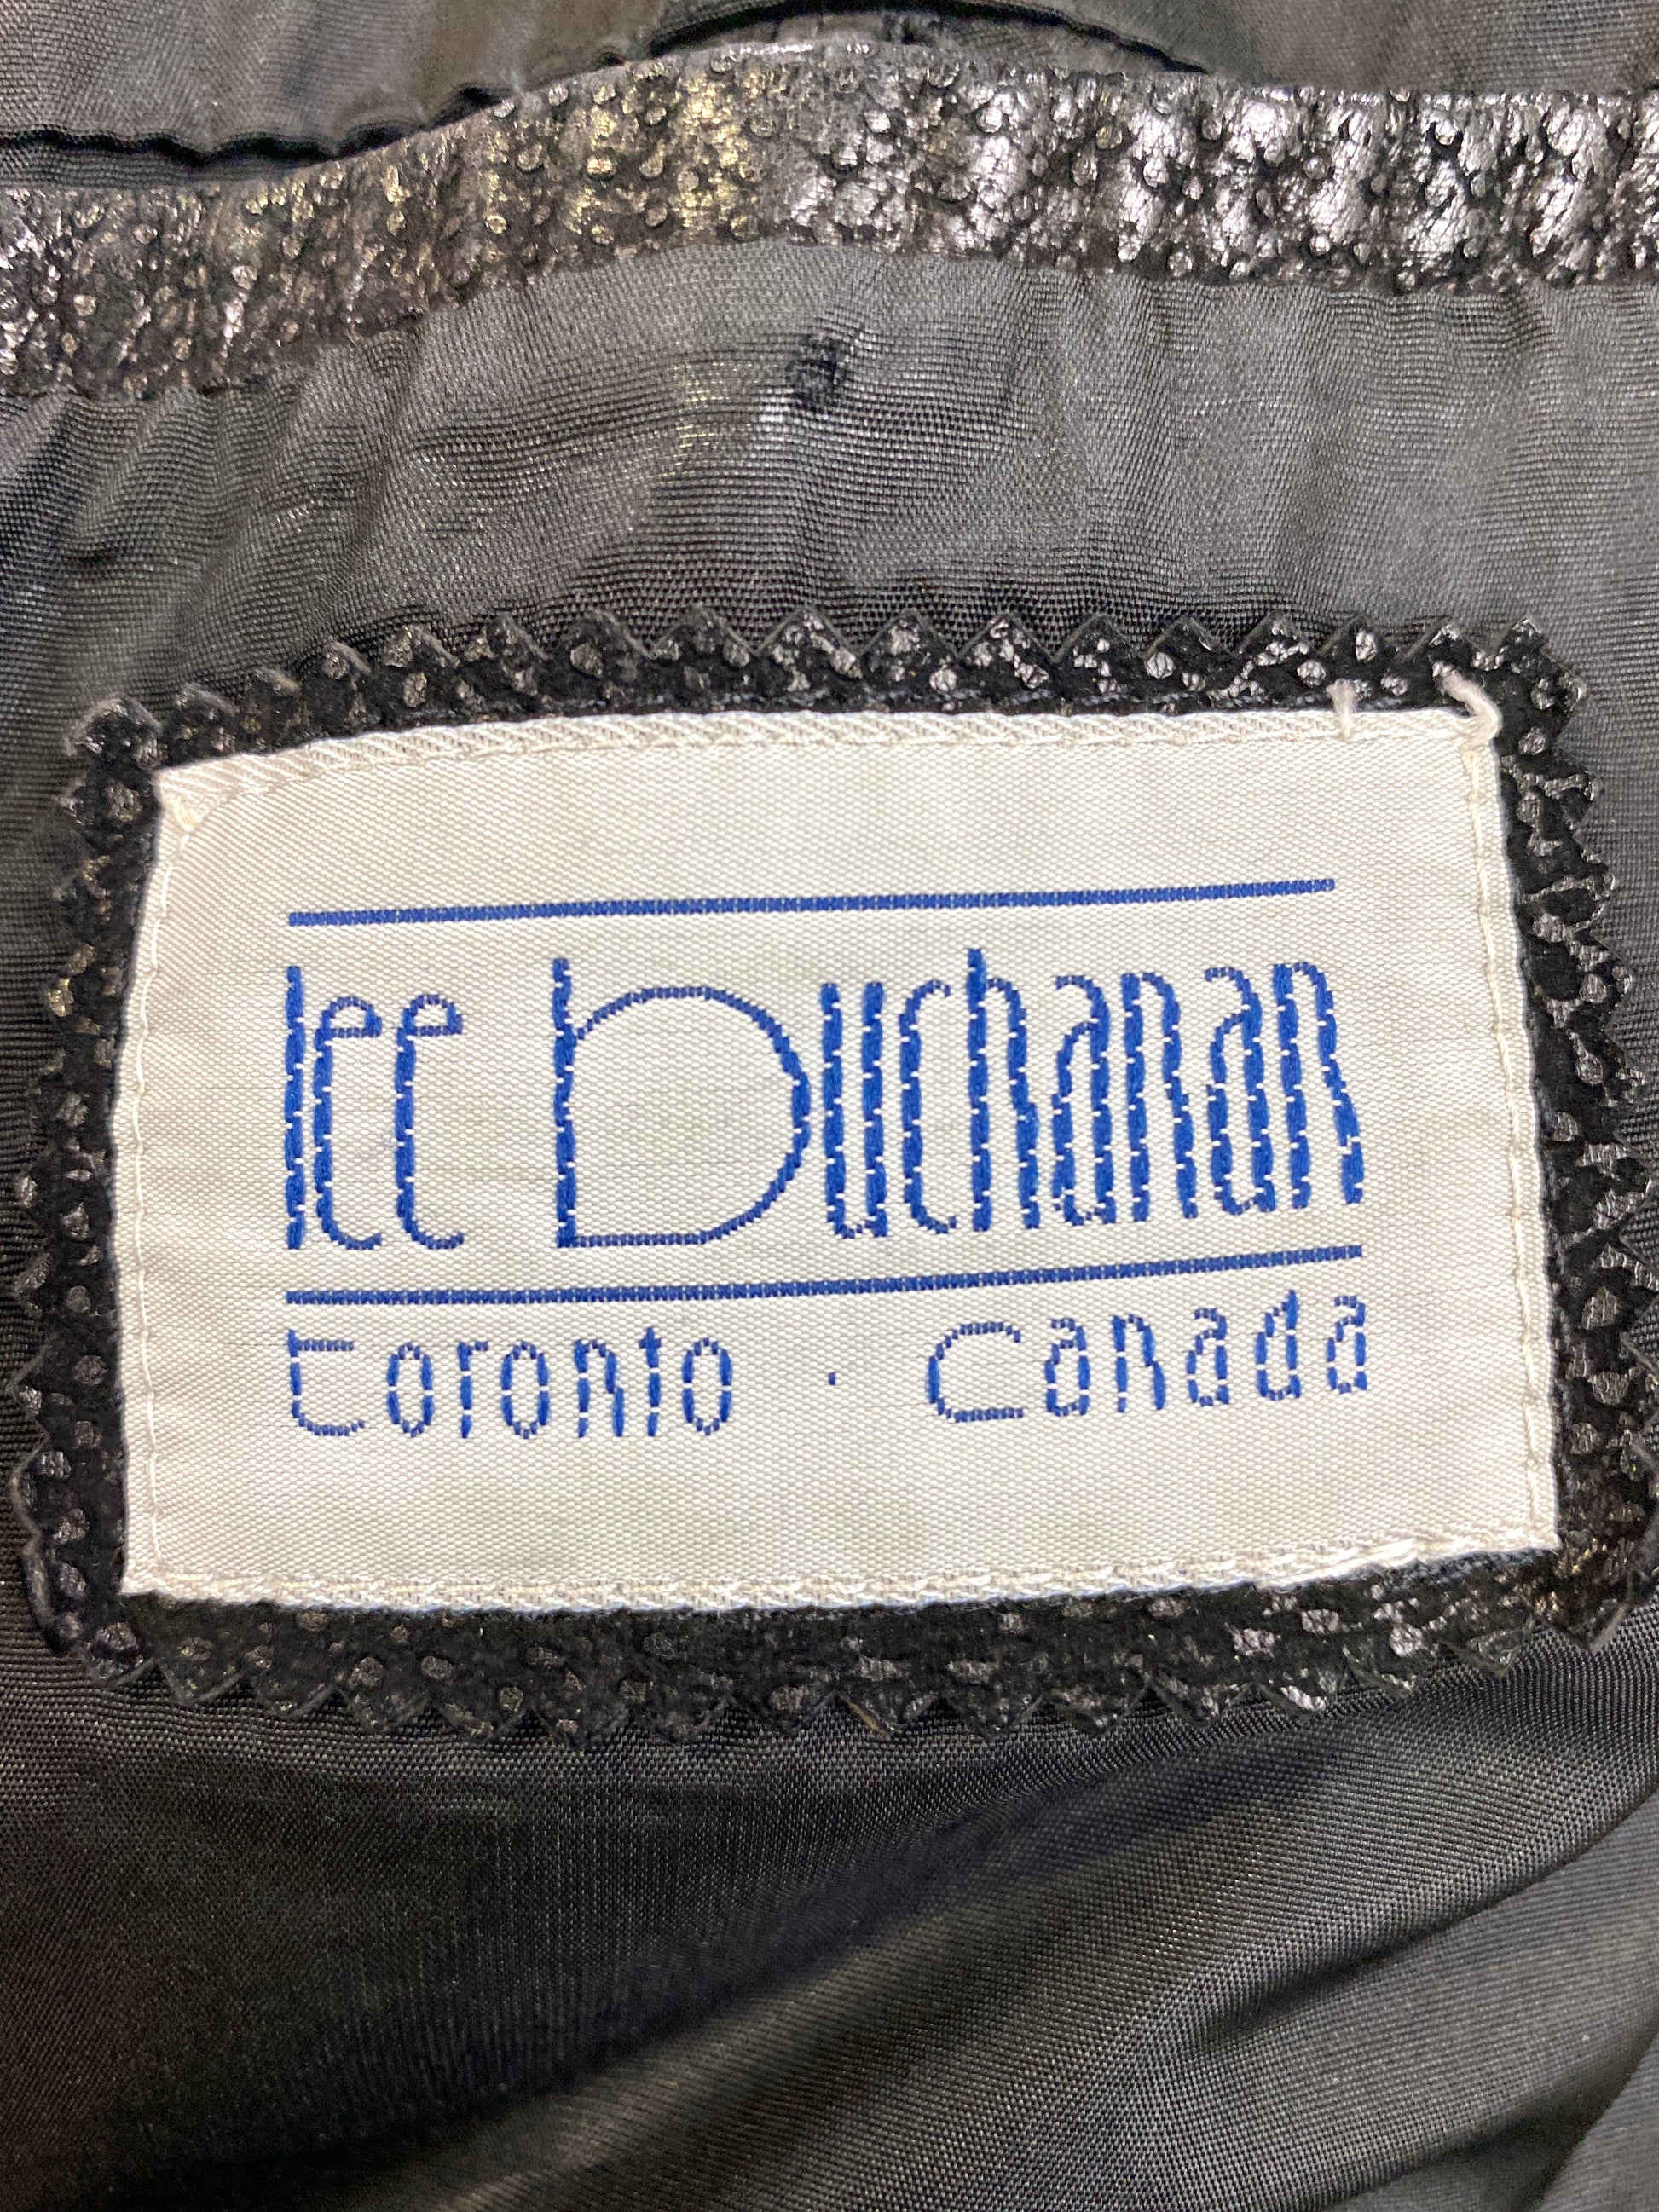 Vintage 1980s Black leather Lee Buchanan Cropped Jacket, B46"